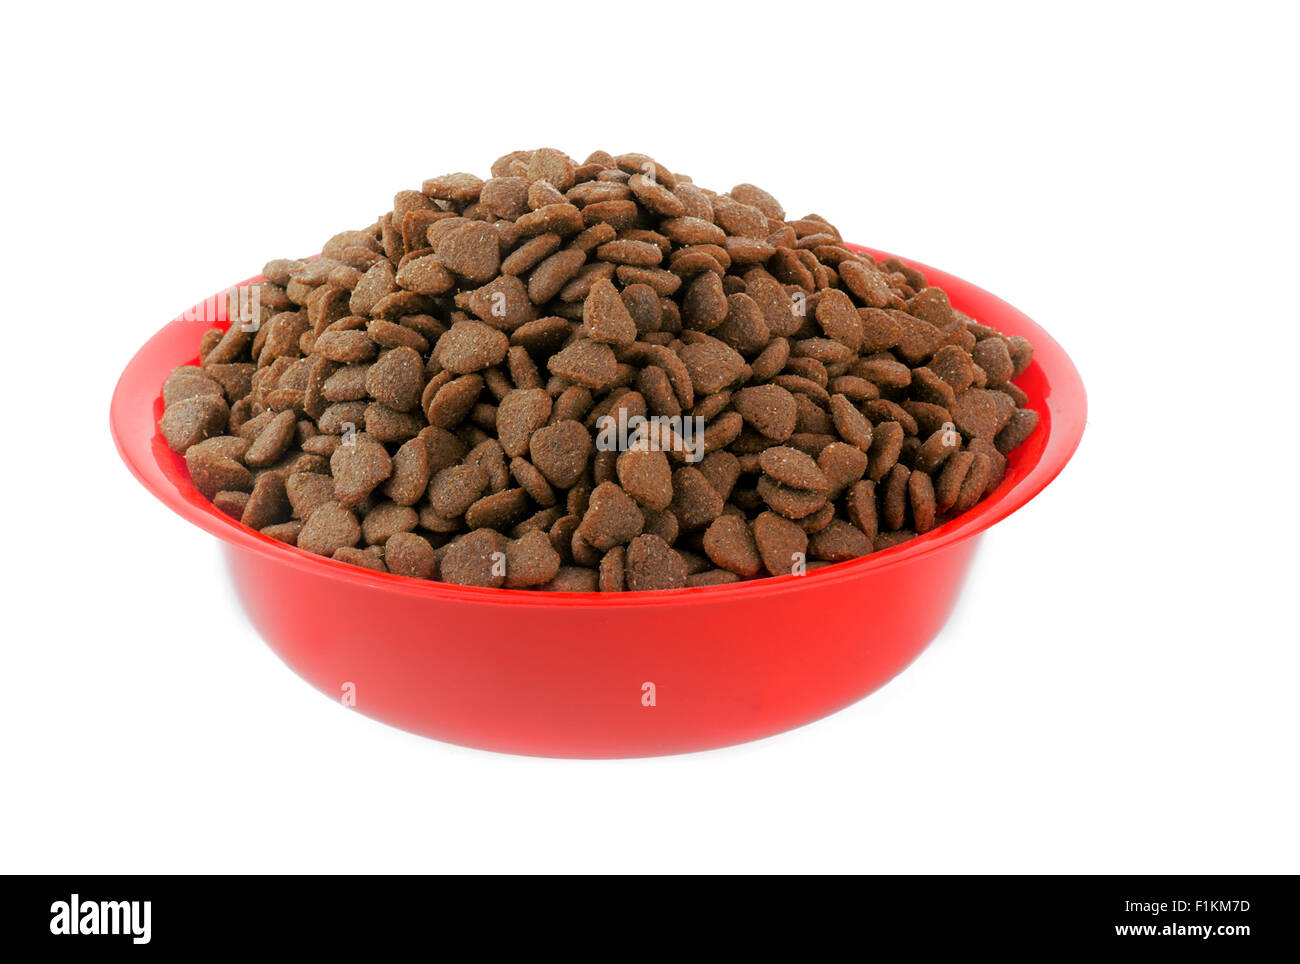 Moist Healthy Dog or cat food in an animal feeding bowl Stock Photo